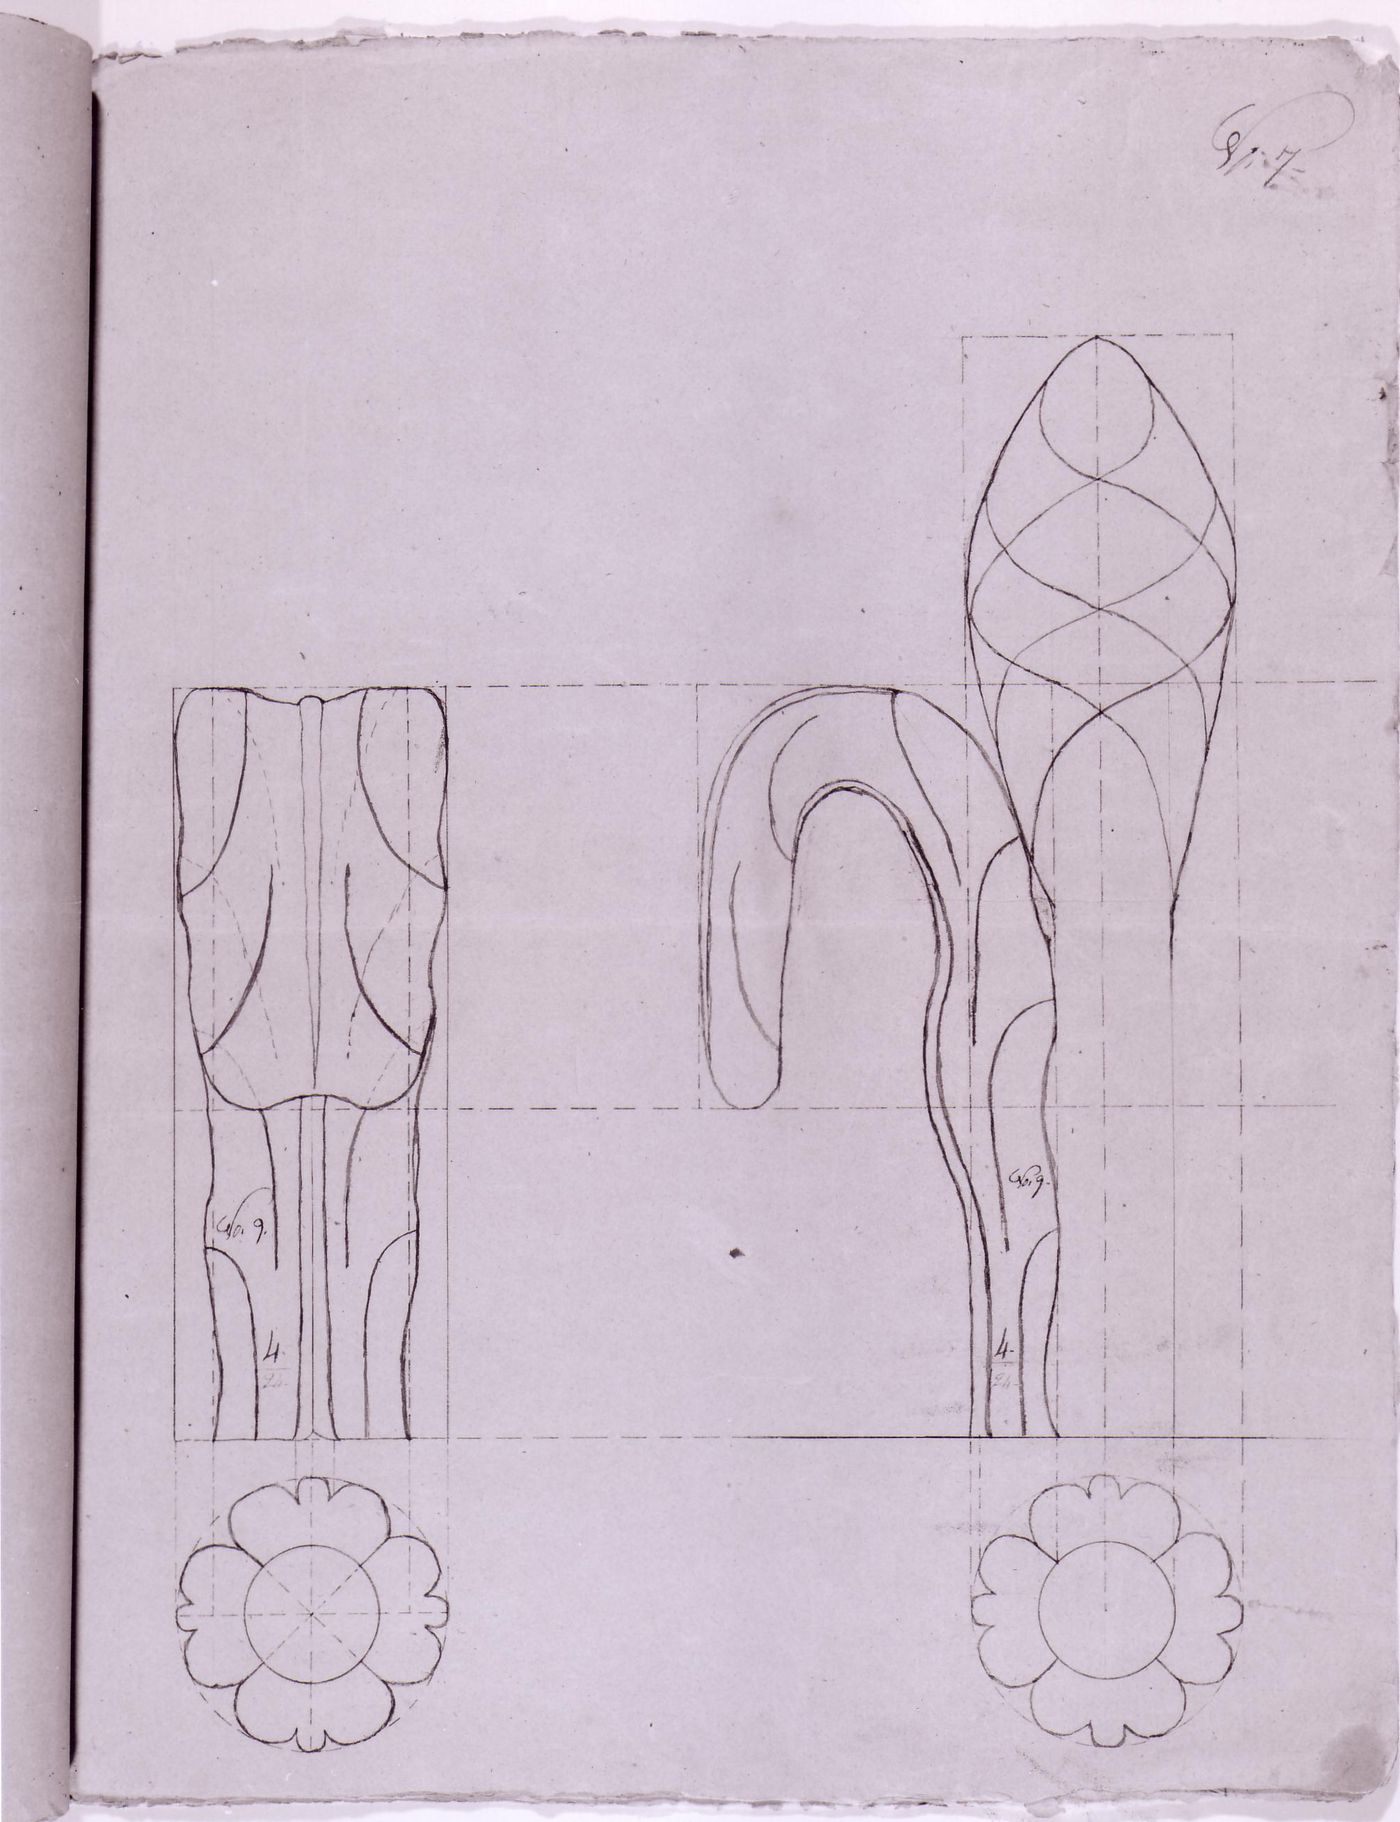 Plans and elevations for a decorative details for the high altar for Notre-Dame de Montréal